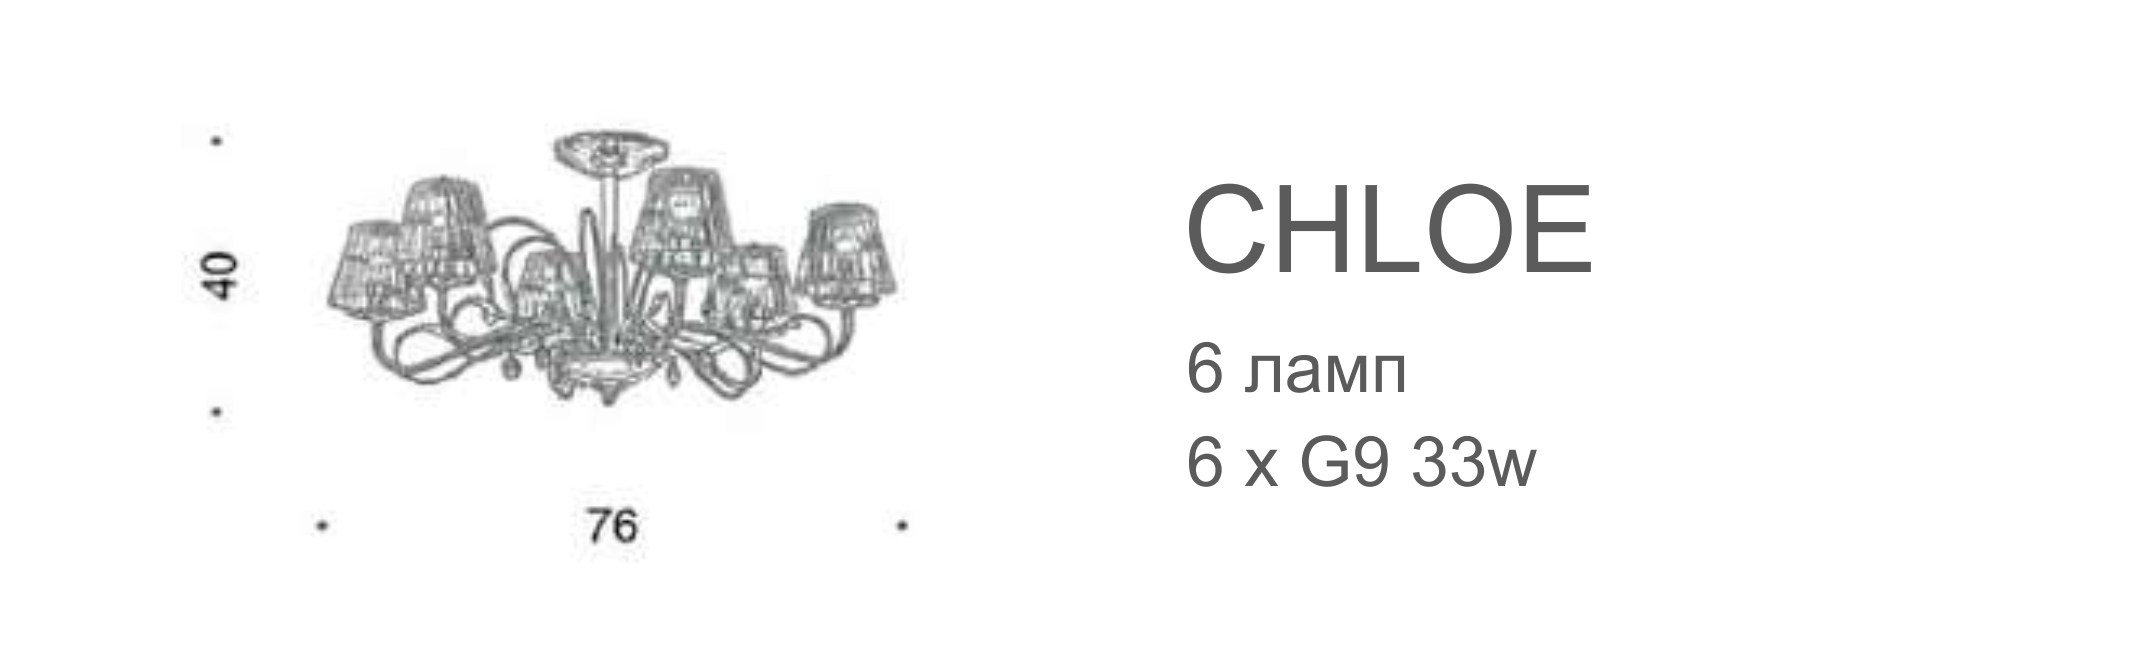 Люстра Chloè - 6 ламп (потолочная)